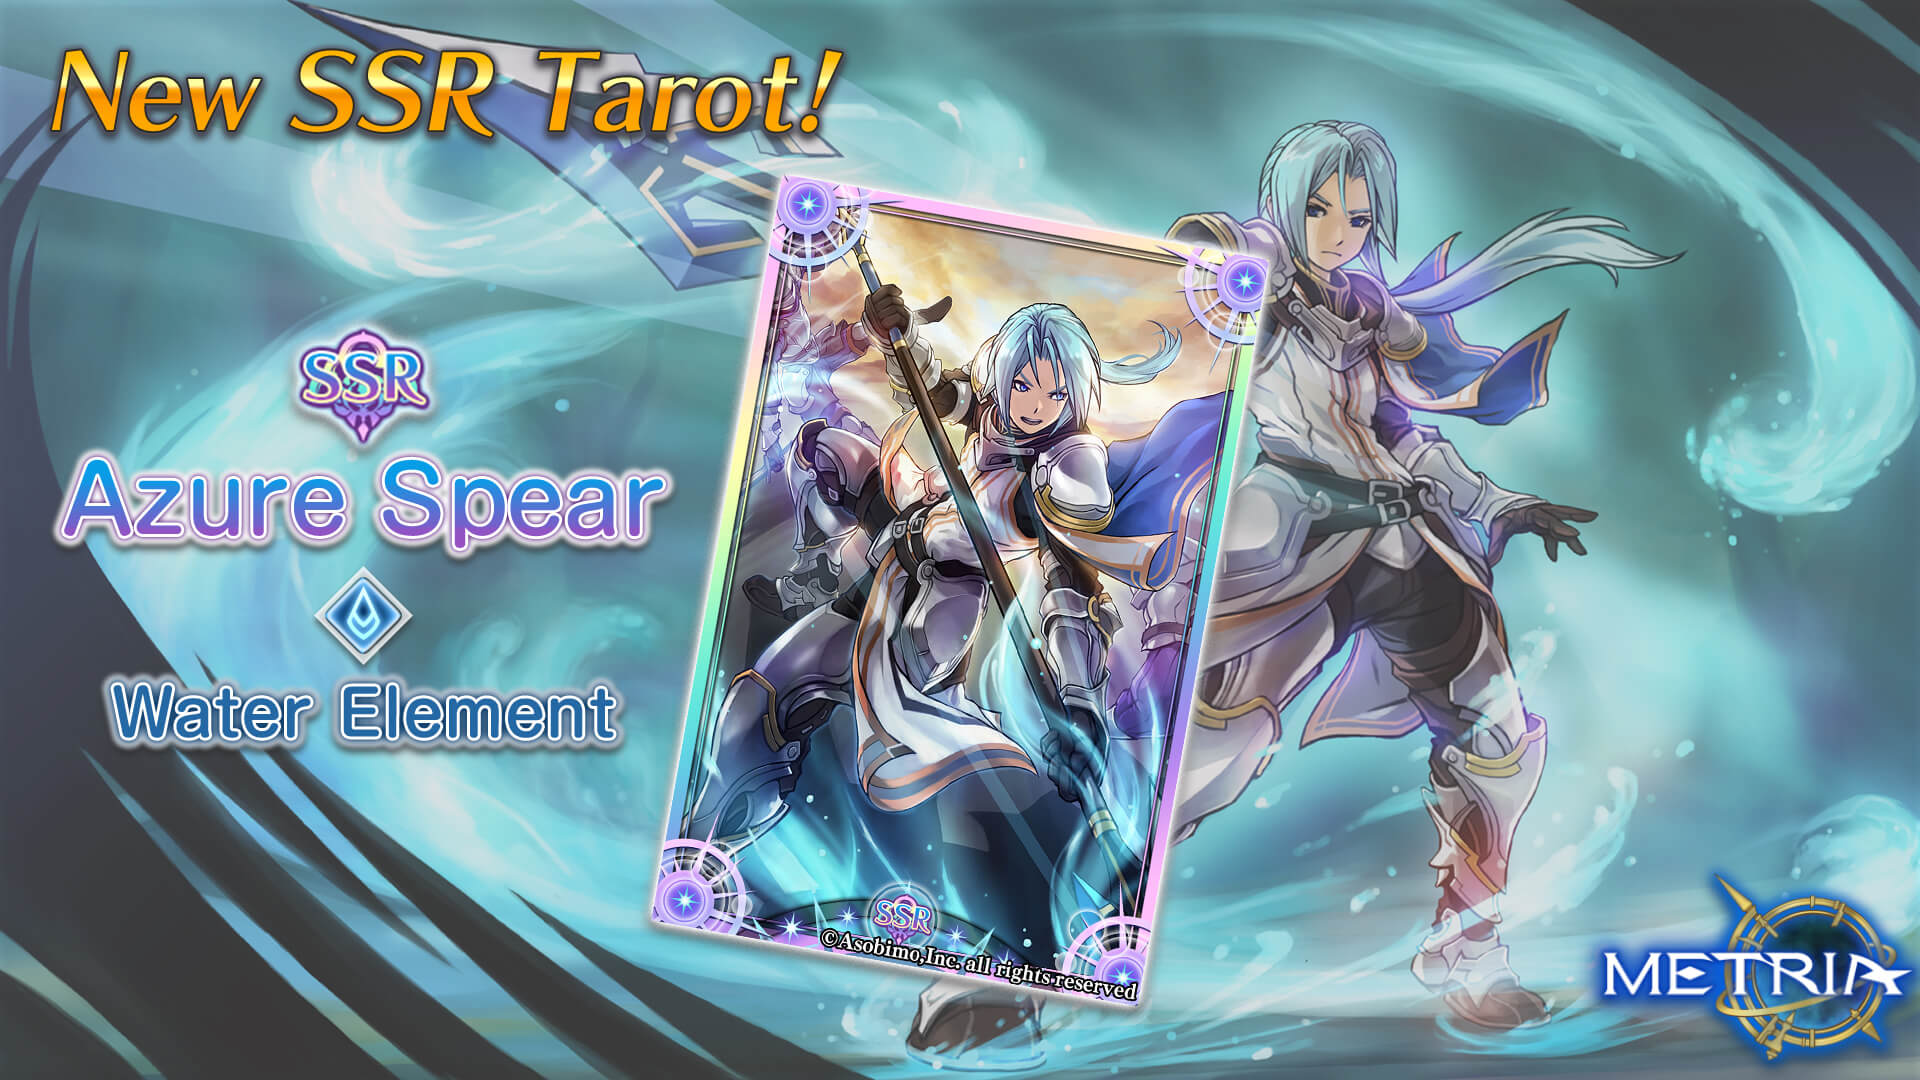 New SSR Tarot: "Azure Spear" Coming Soon!